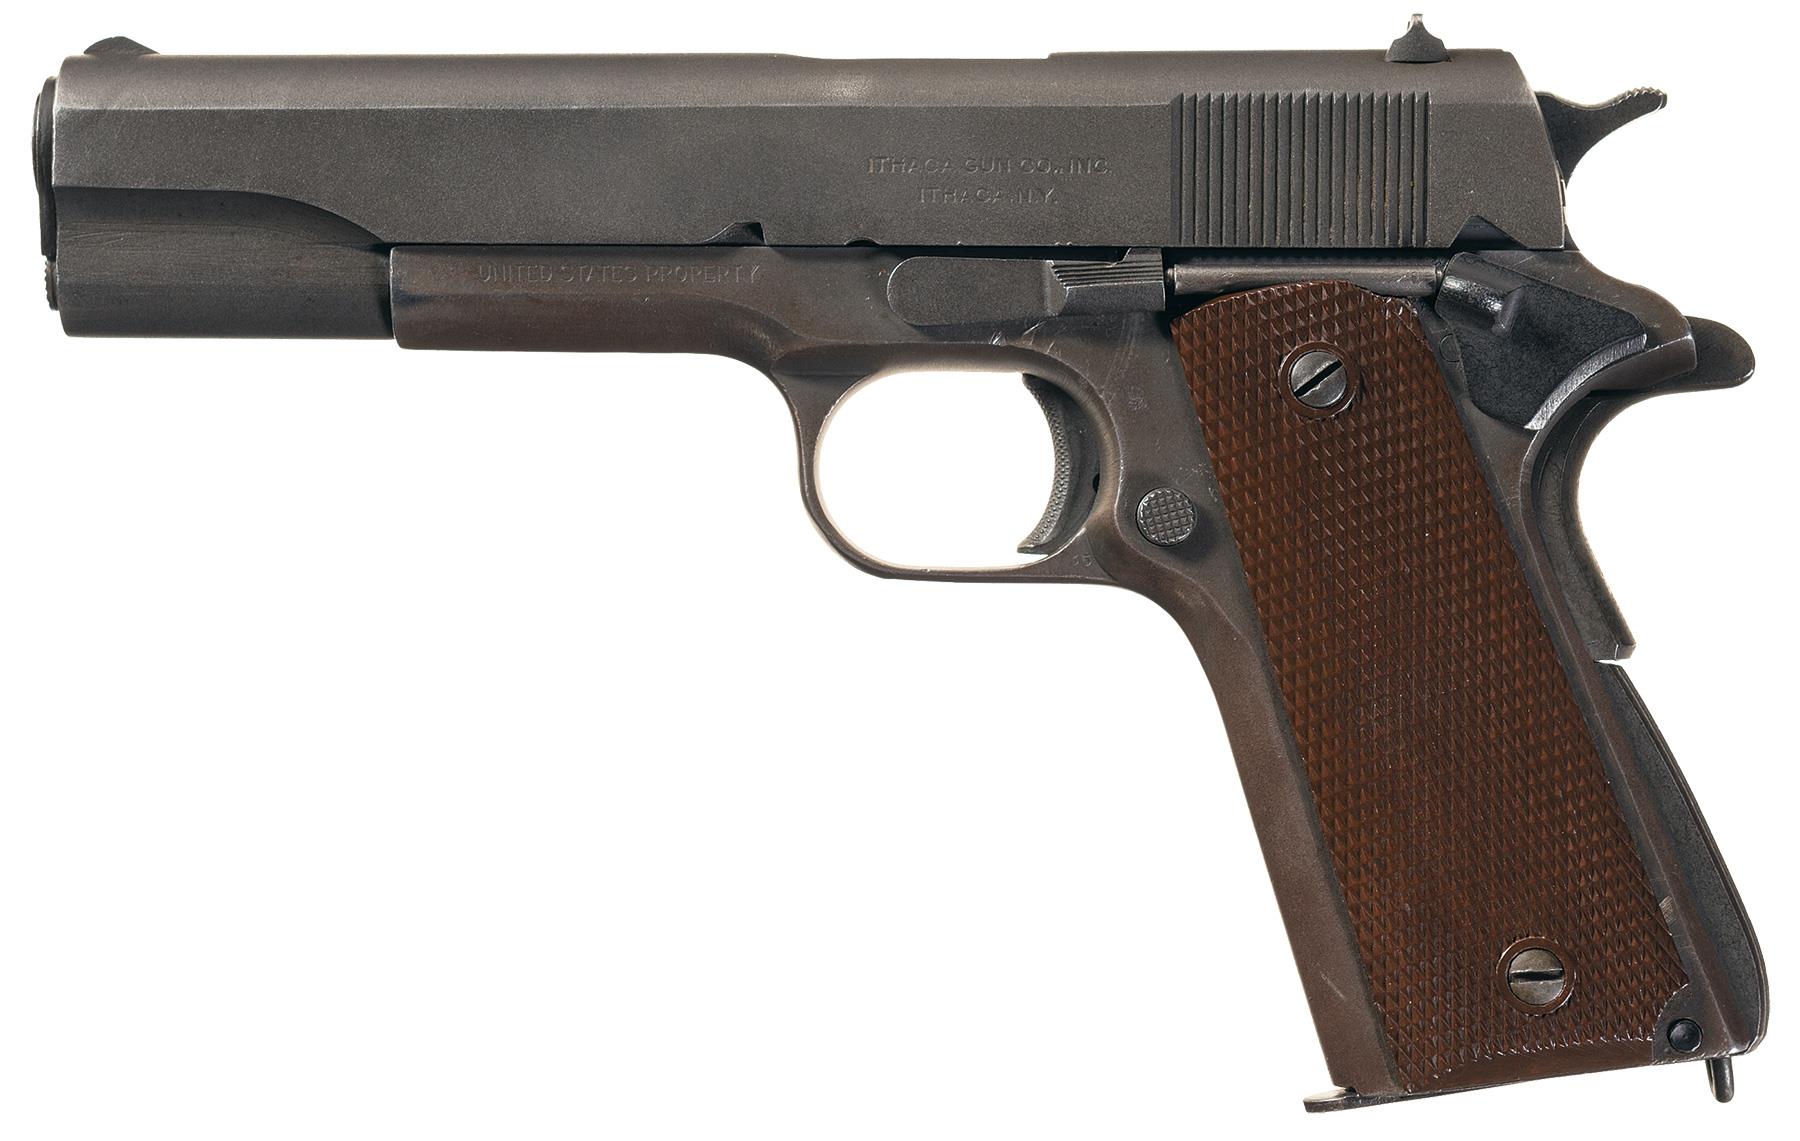 U.S. Colt/Ithaca Model 1911 Semi-Automatic Pistol